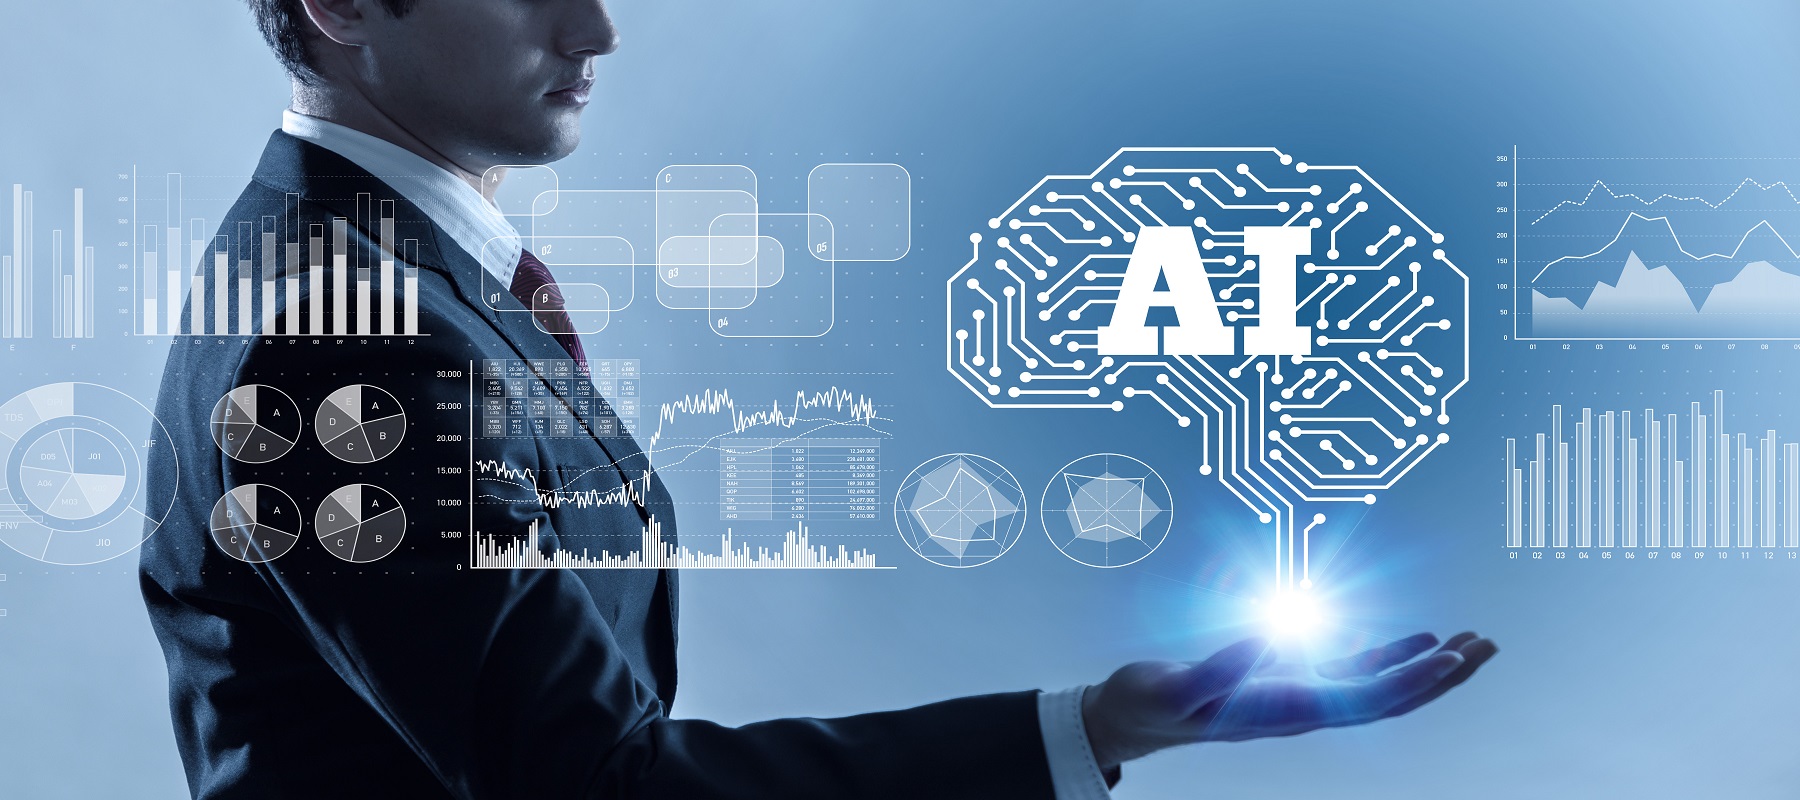 Global artificial intelligence in marketing market to reach $64.3 billion in 2027, report